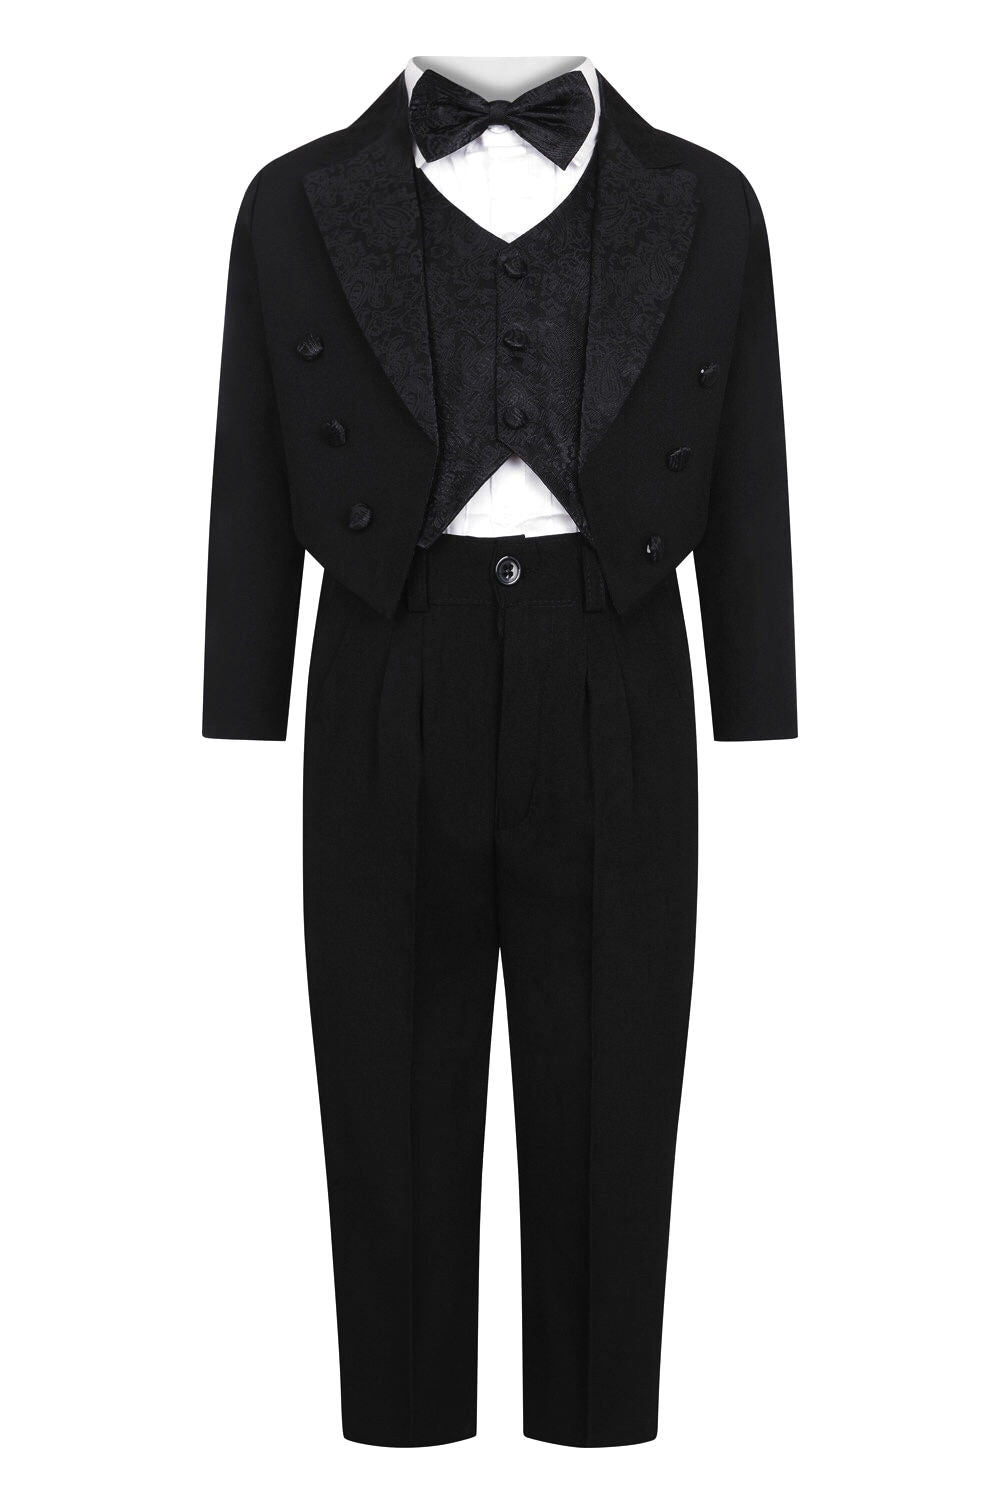 Tuxedo 5 Piece - Black Slim Fit Suit Boys 3 Months - 5 Years